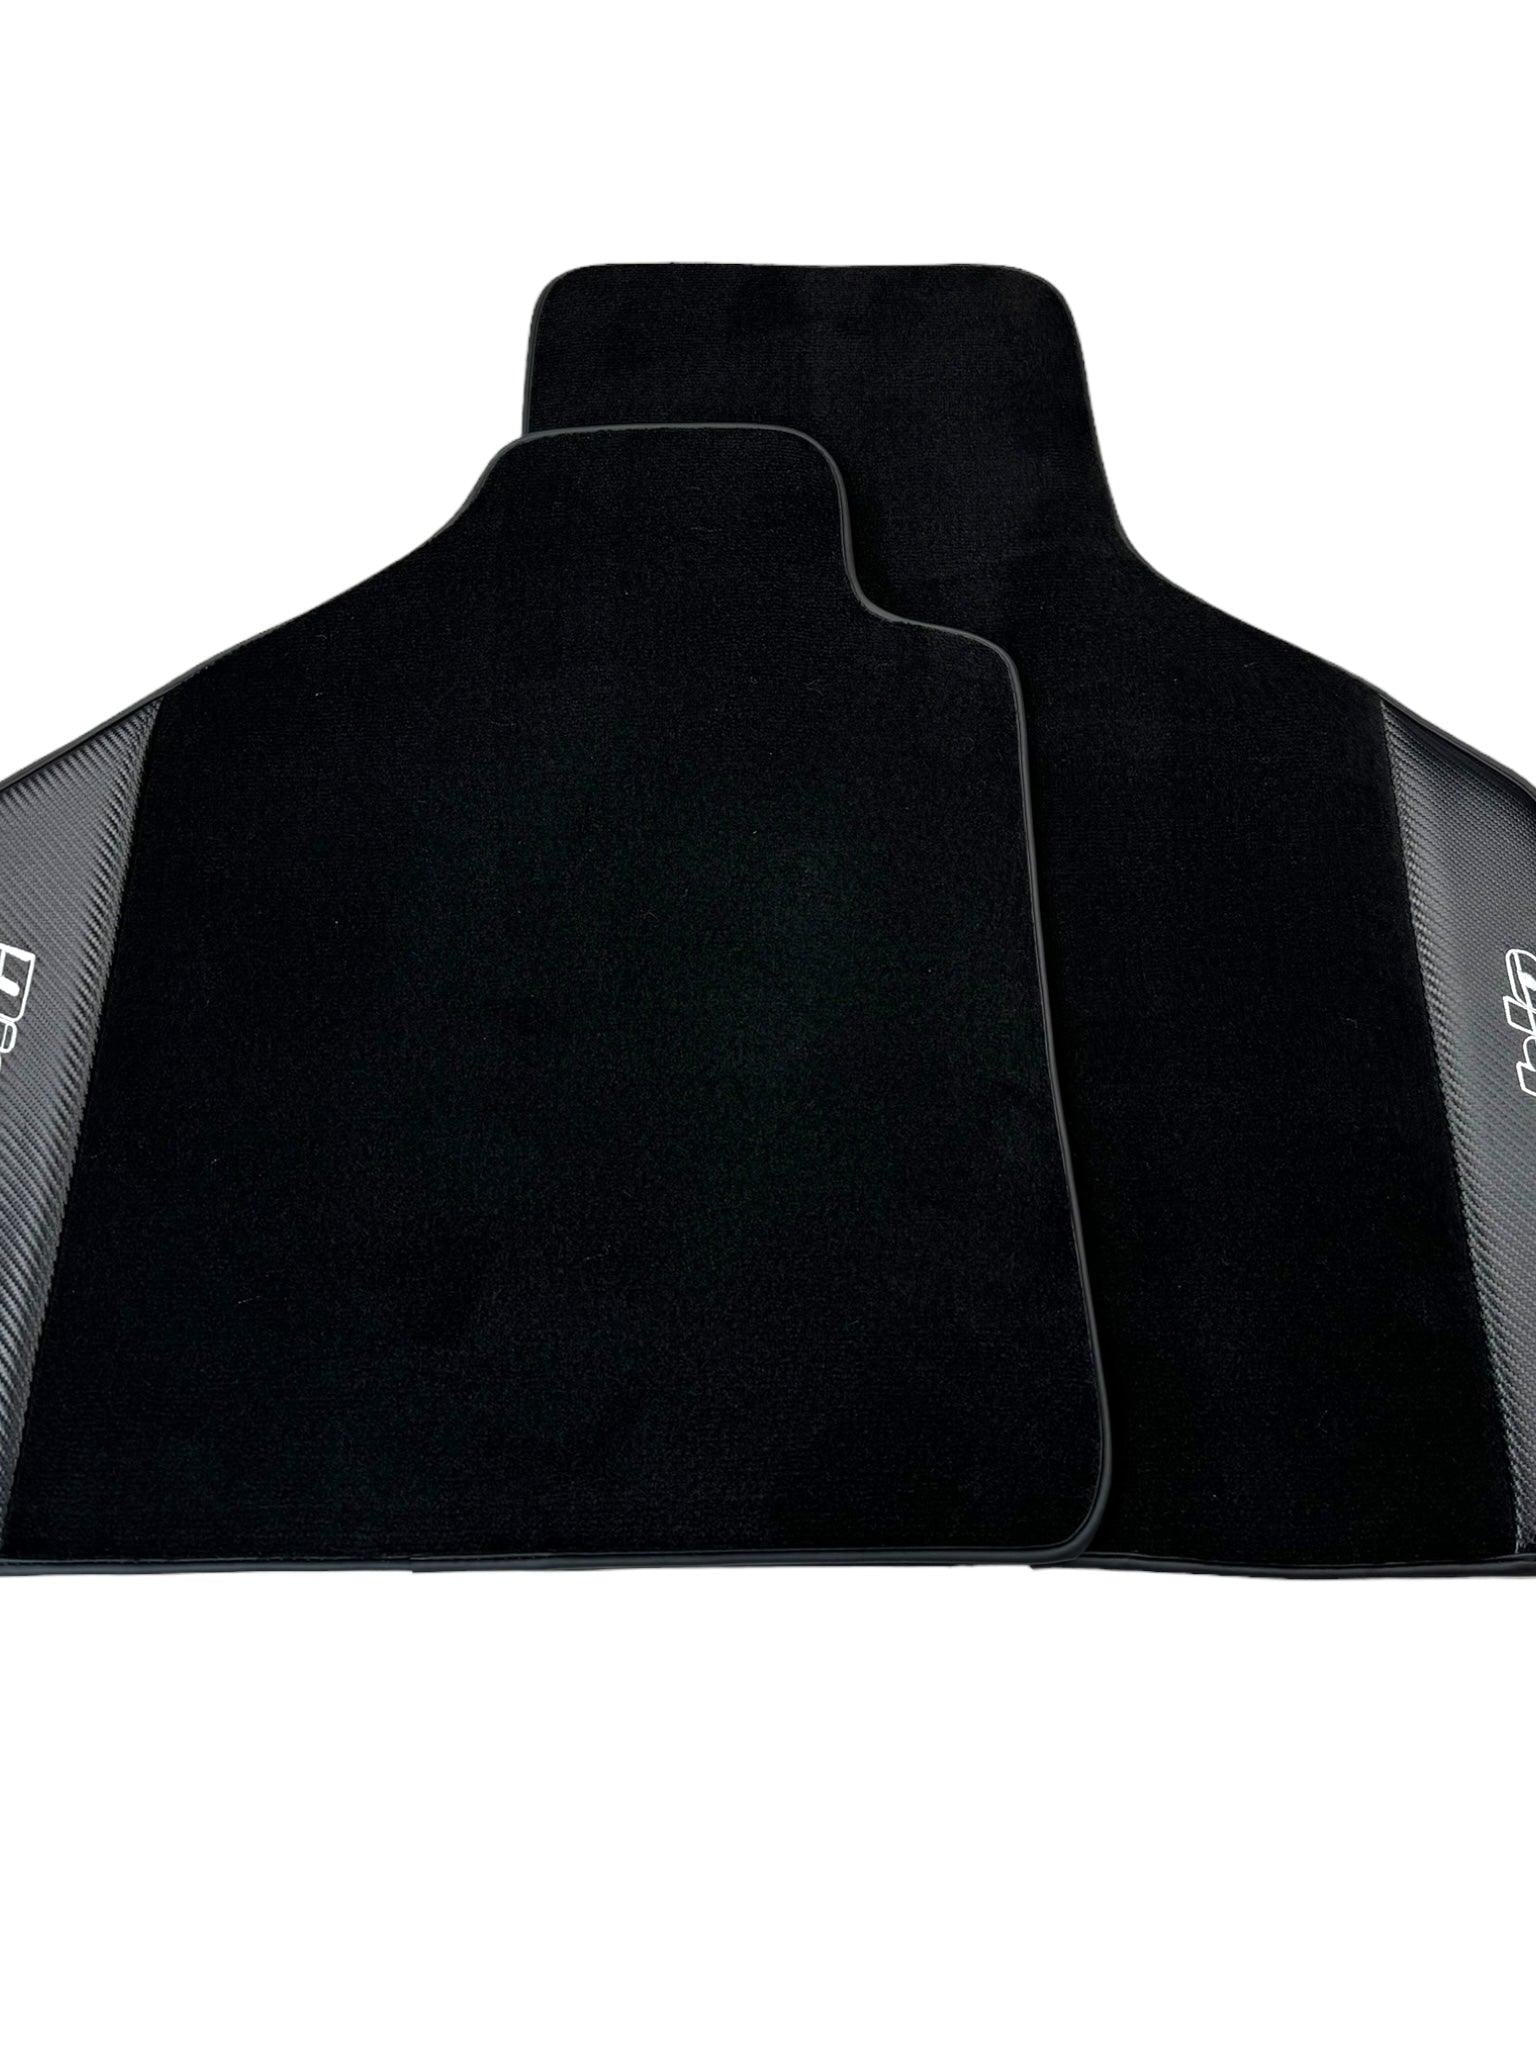 Black Floor Mats for Lamborghini Diablo (1990-2001) with Carbon Fiber